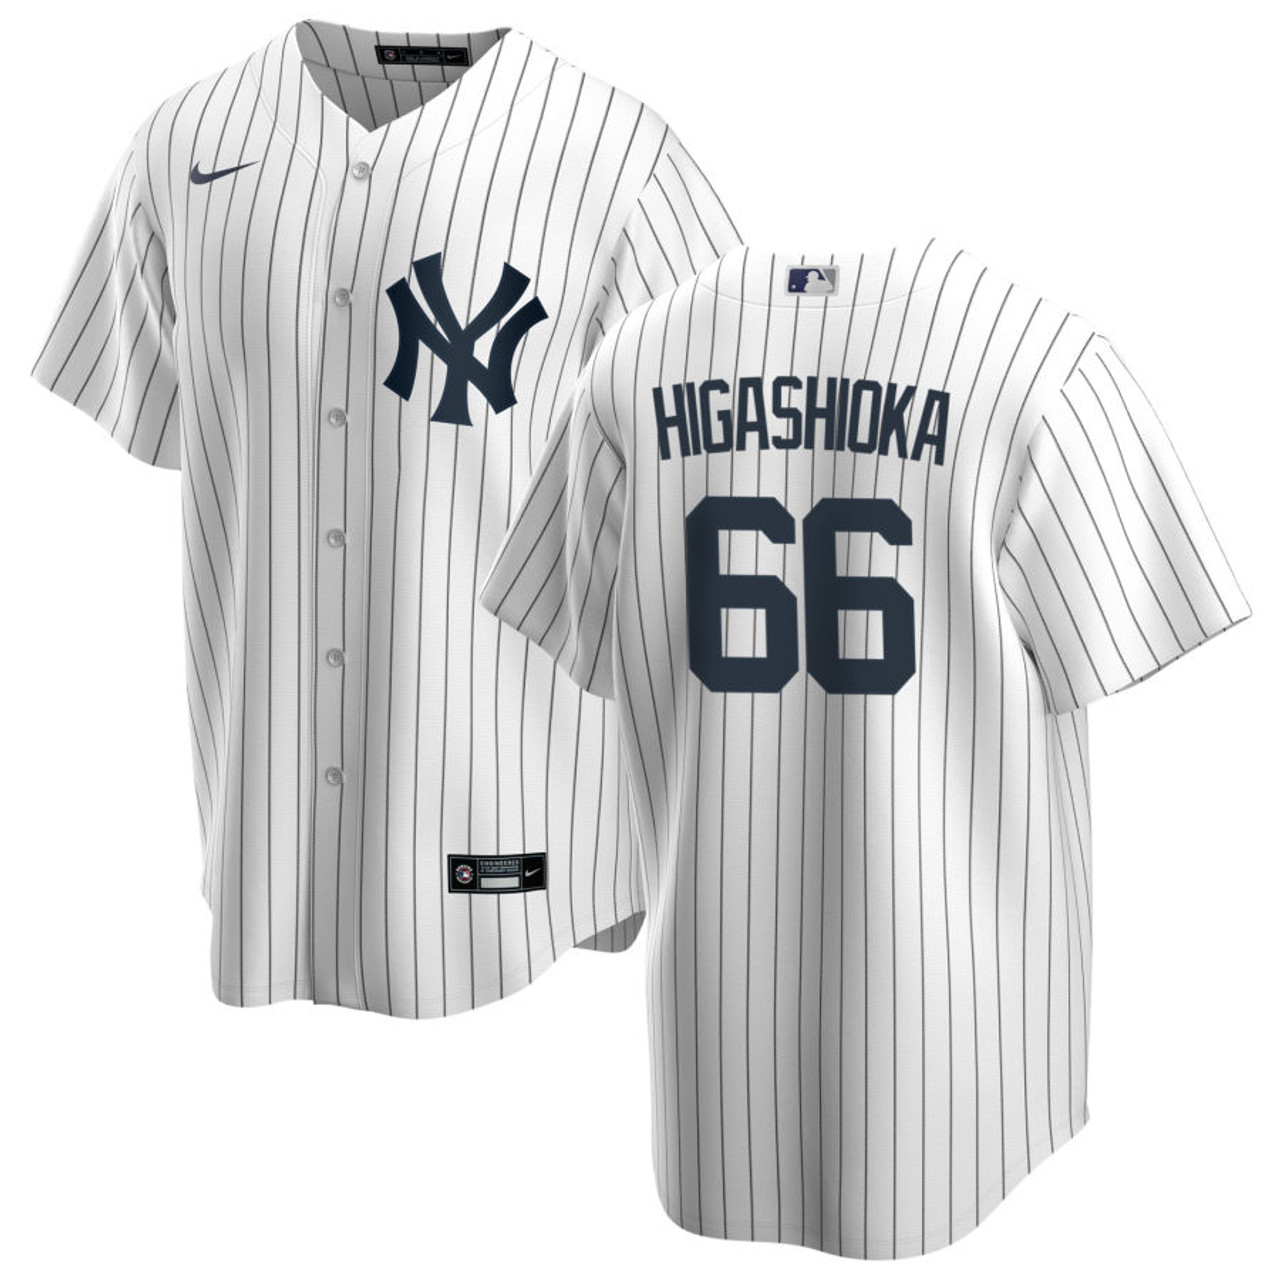 Kyle Higashioka Jerseys and T-Shirts for Adults and Kids